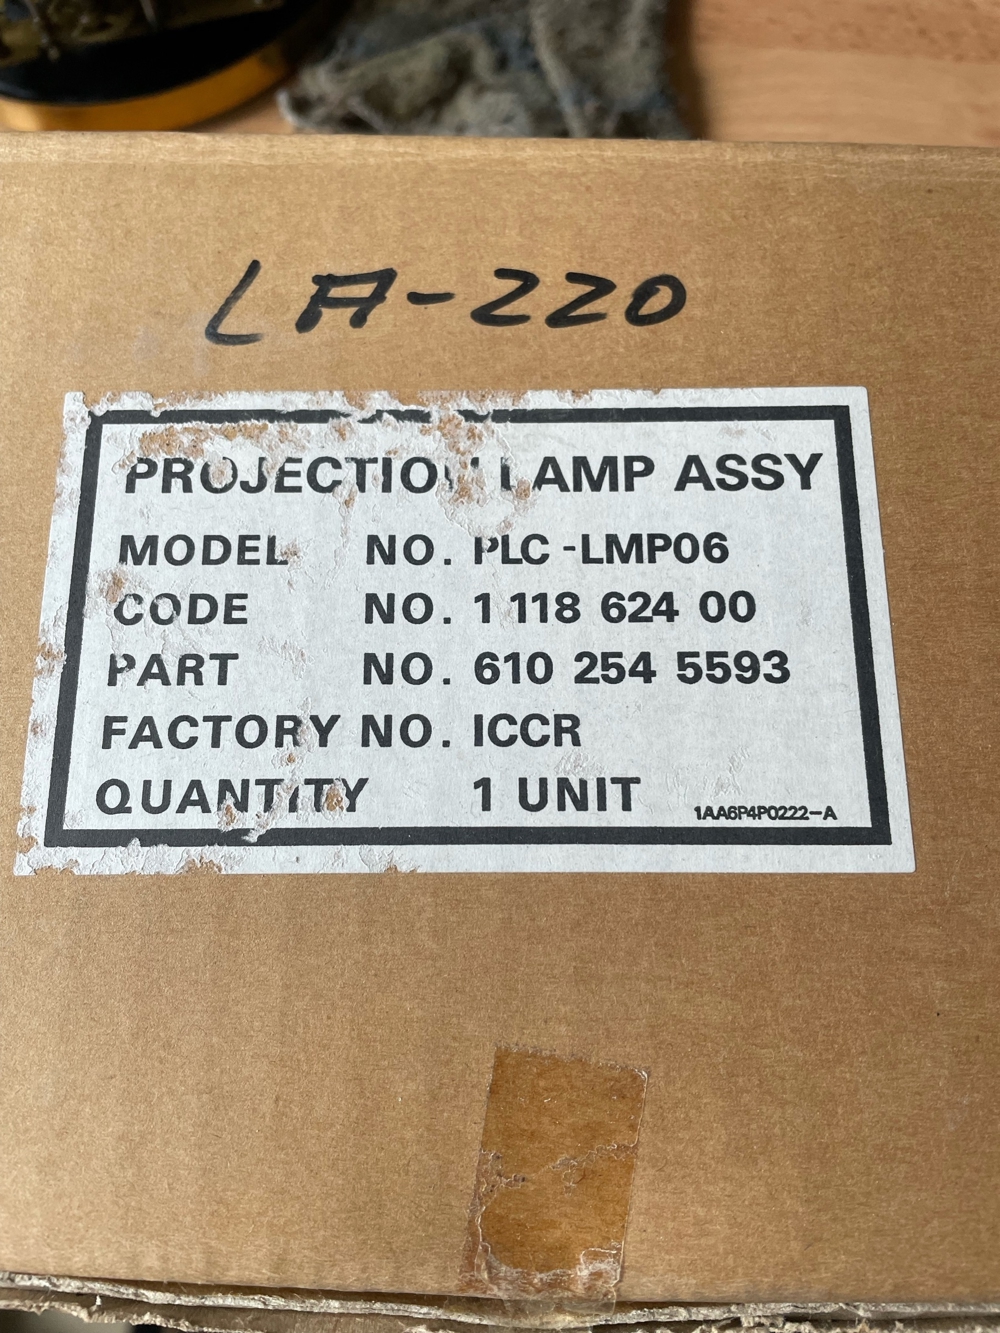 PROJECTION LAMP ASSY MODEL NO. PLC -LMPO6 CODE NO. 1 118 624 00